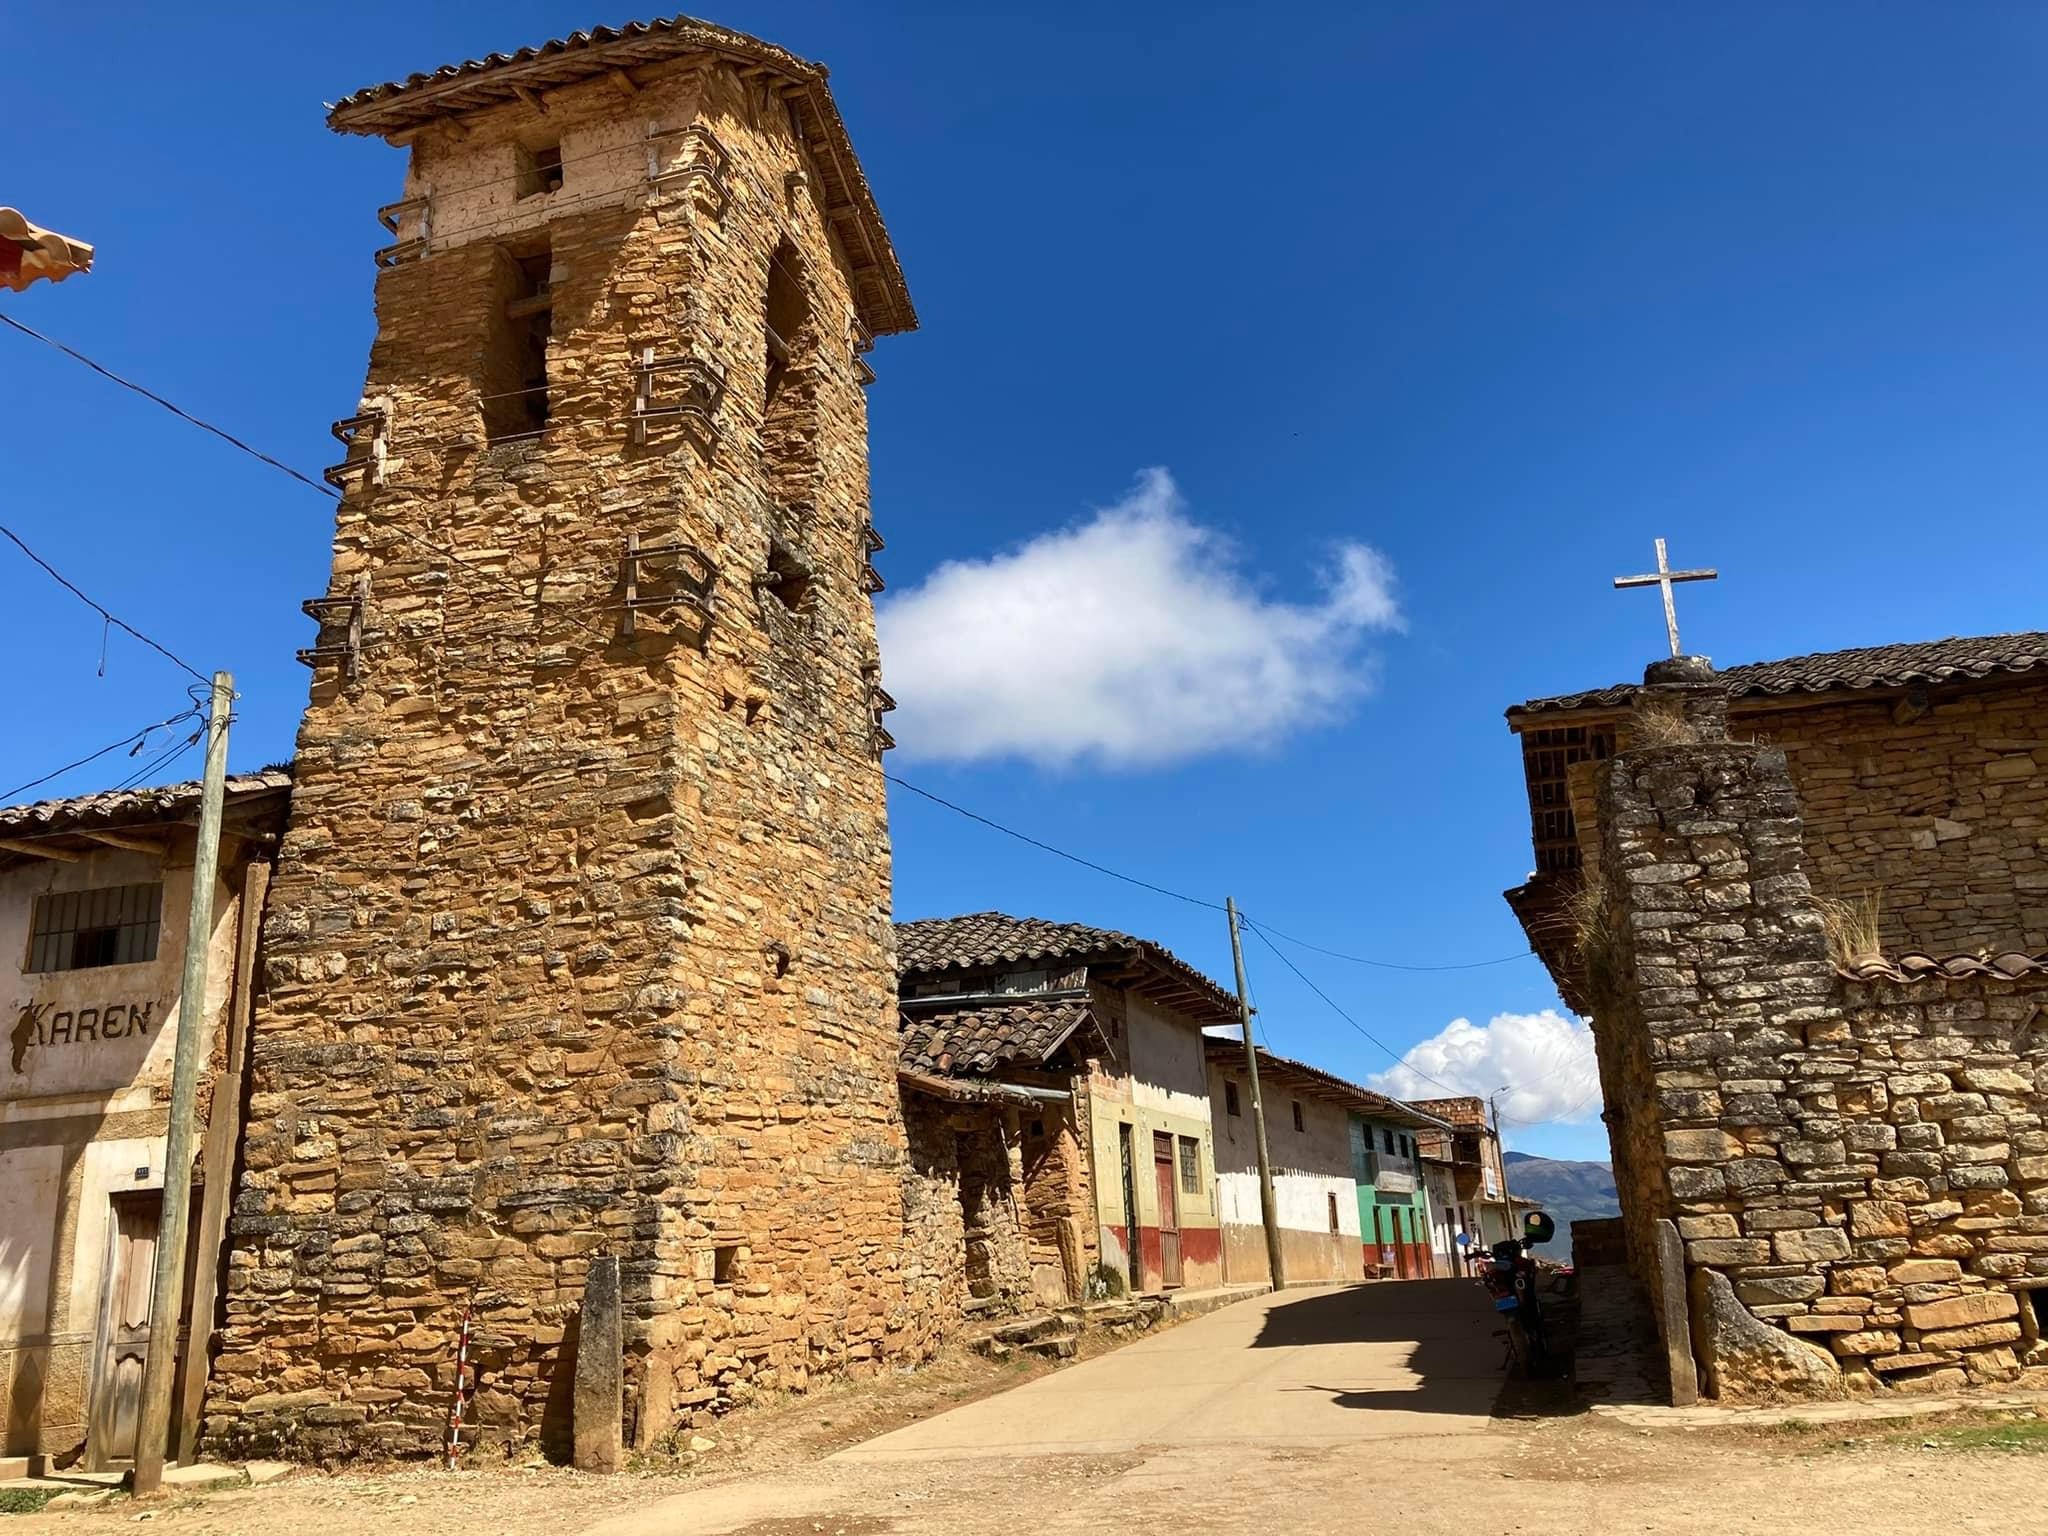 La Jalca Grande church tower before the earthquake in Peru